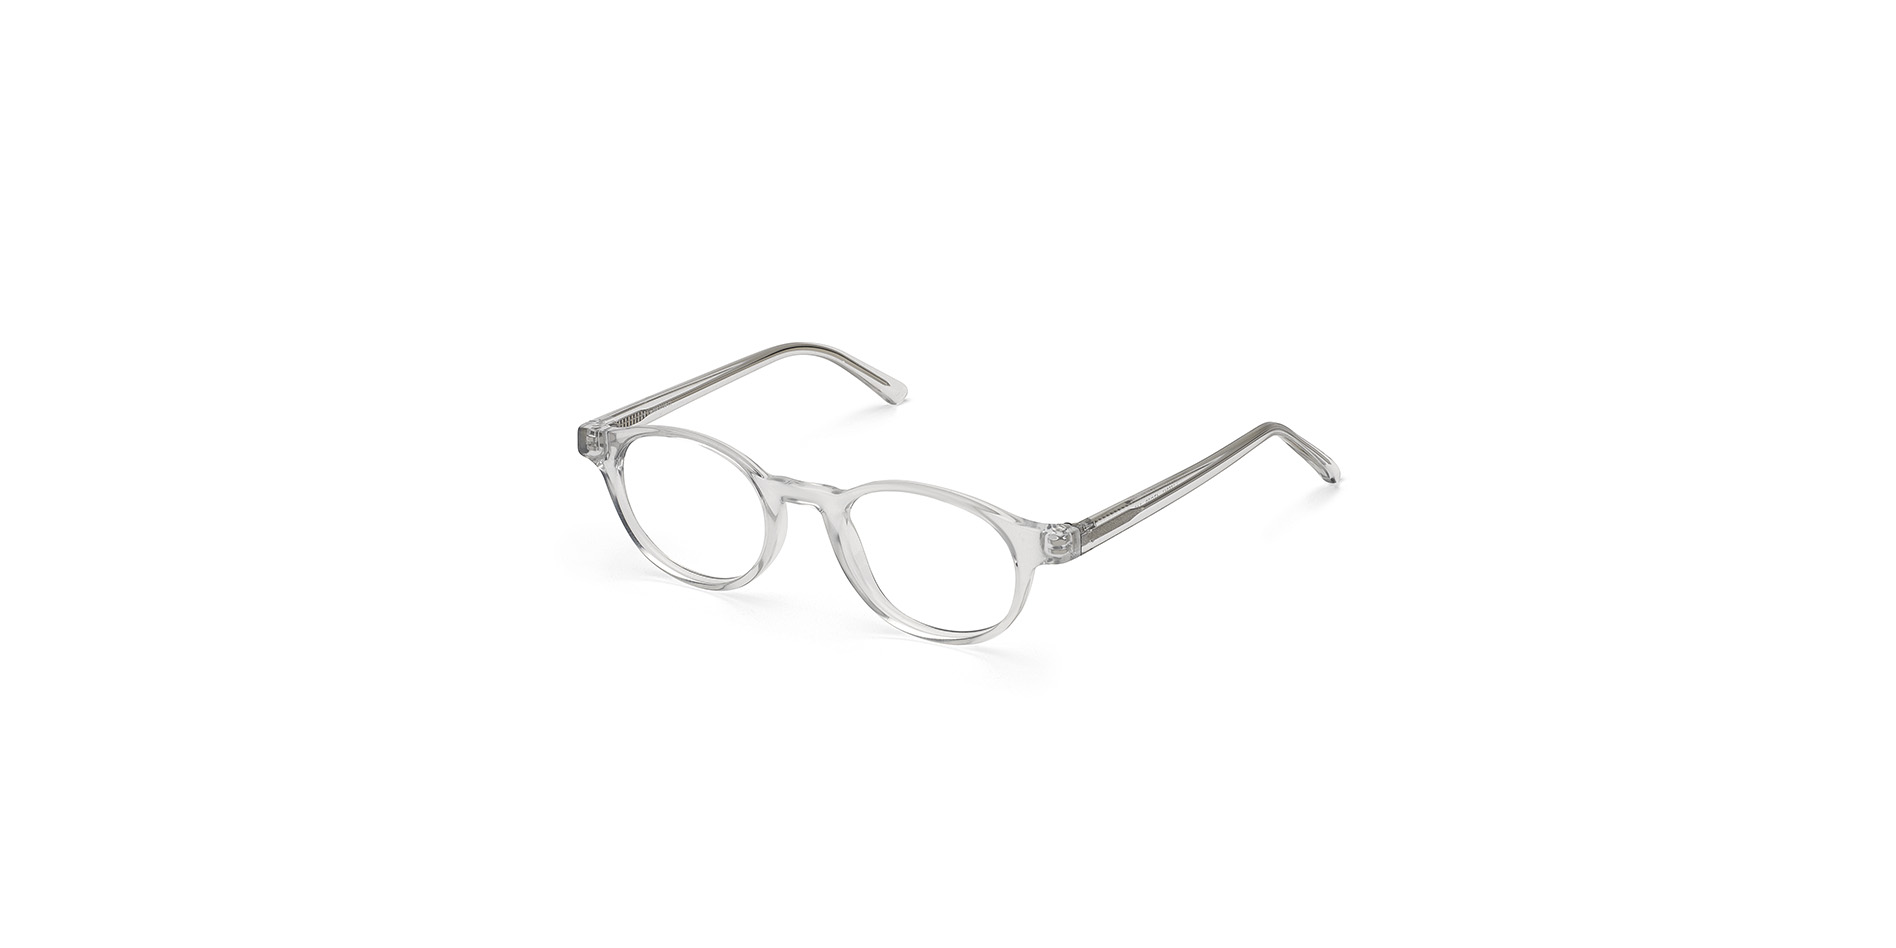 Herrenbrille INTER 2158 CL